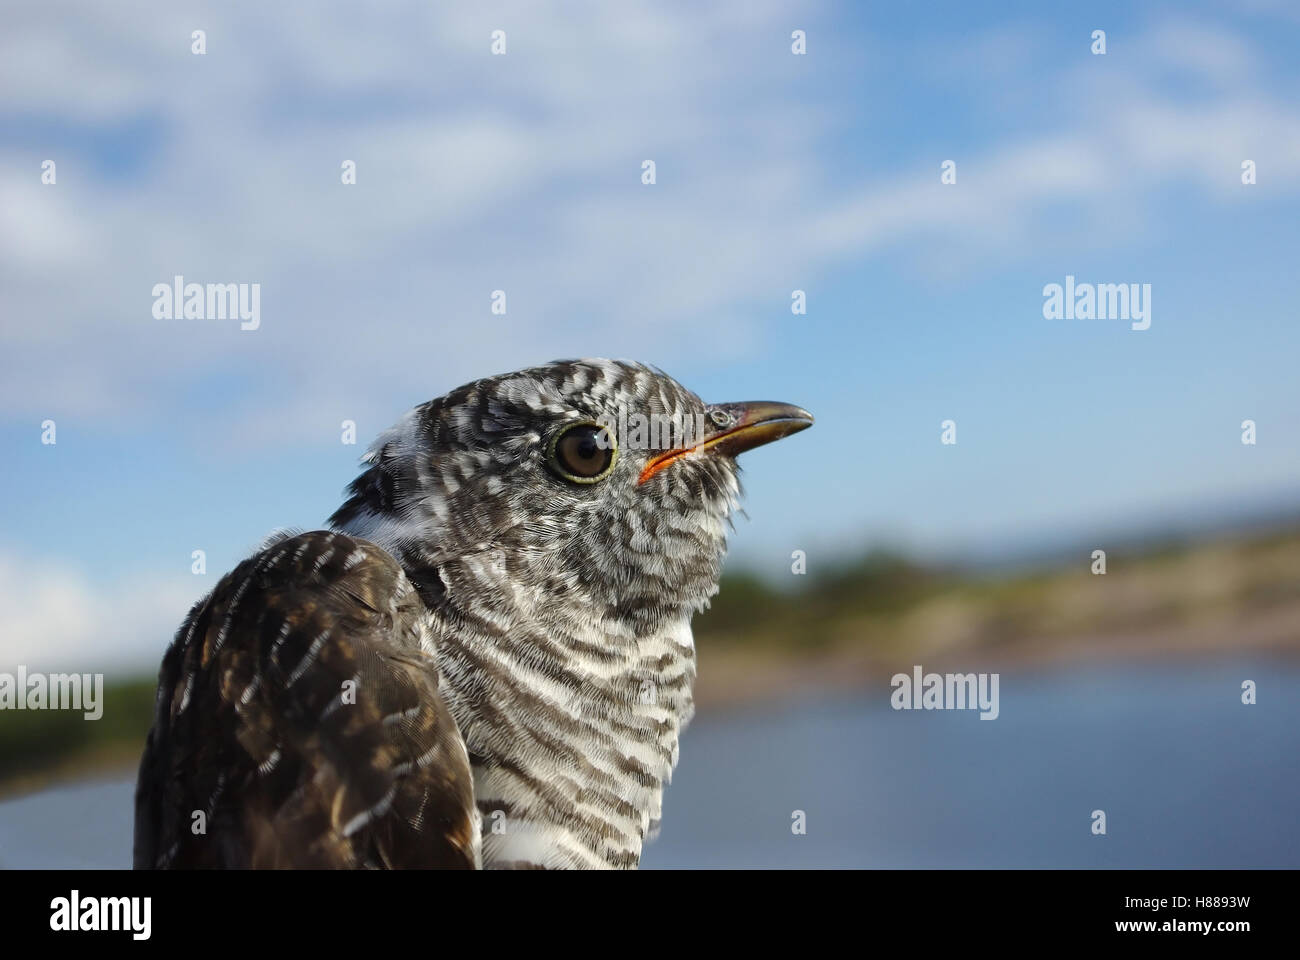 Cuckoo  (Cuculus canorus), a portrait close up against the dark blue sky. Stock Photo